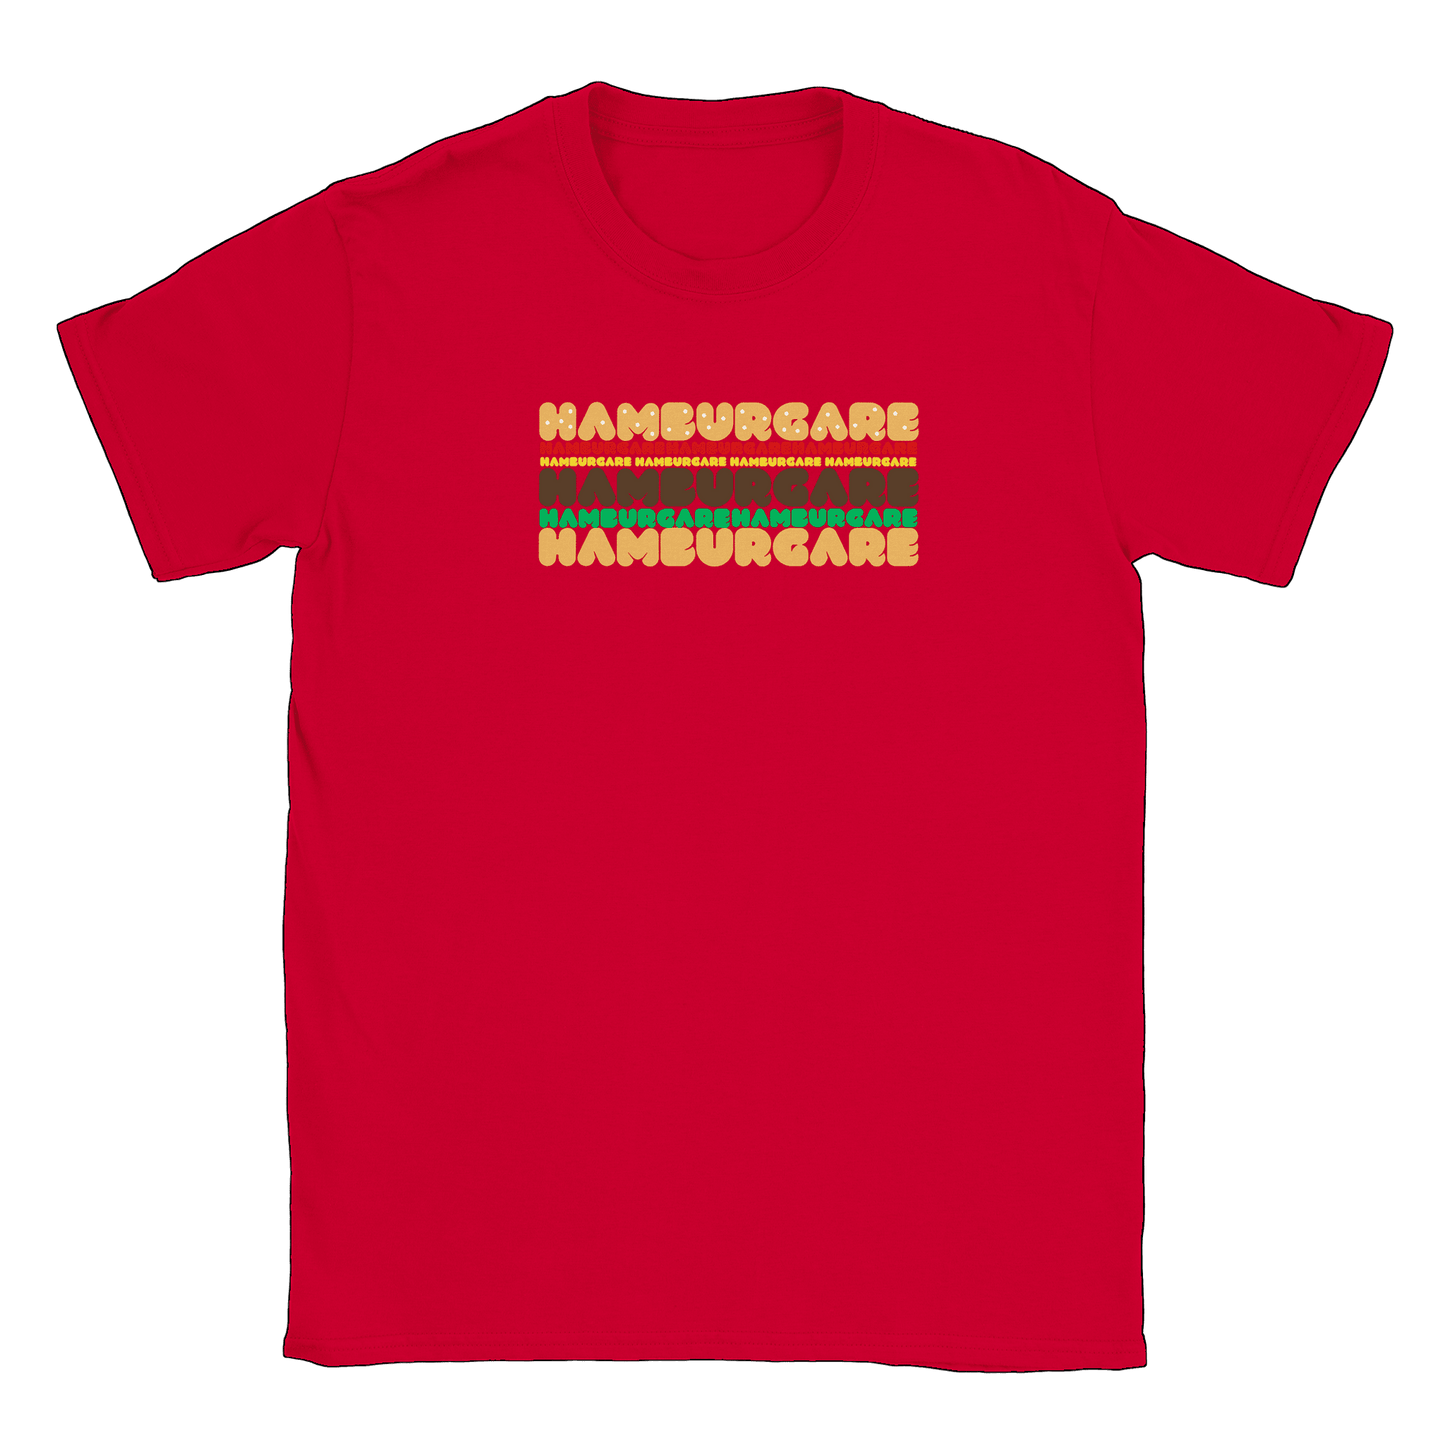 Hamburgare - T-shirt Röd